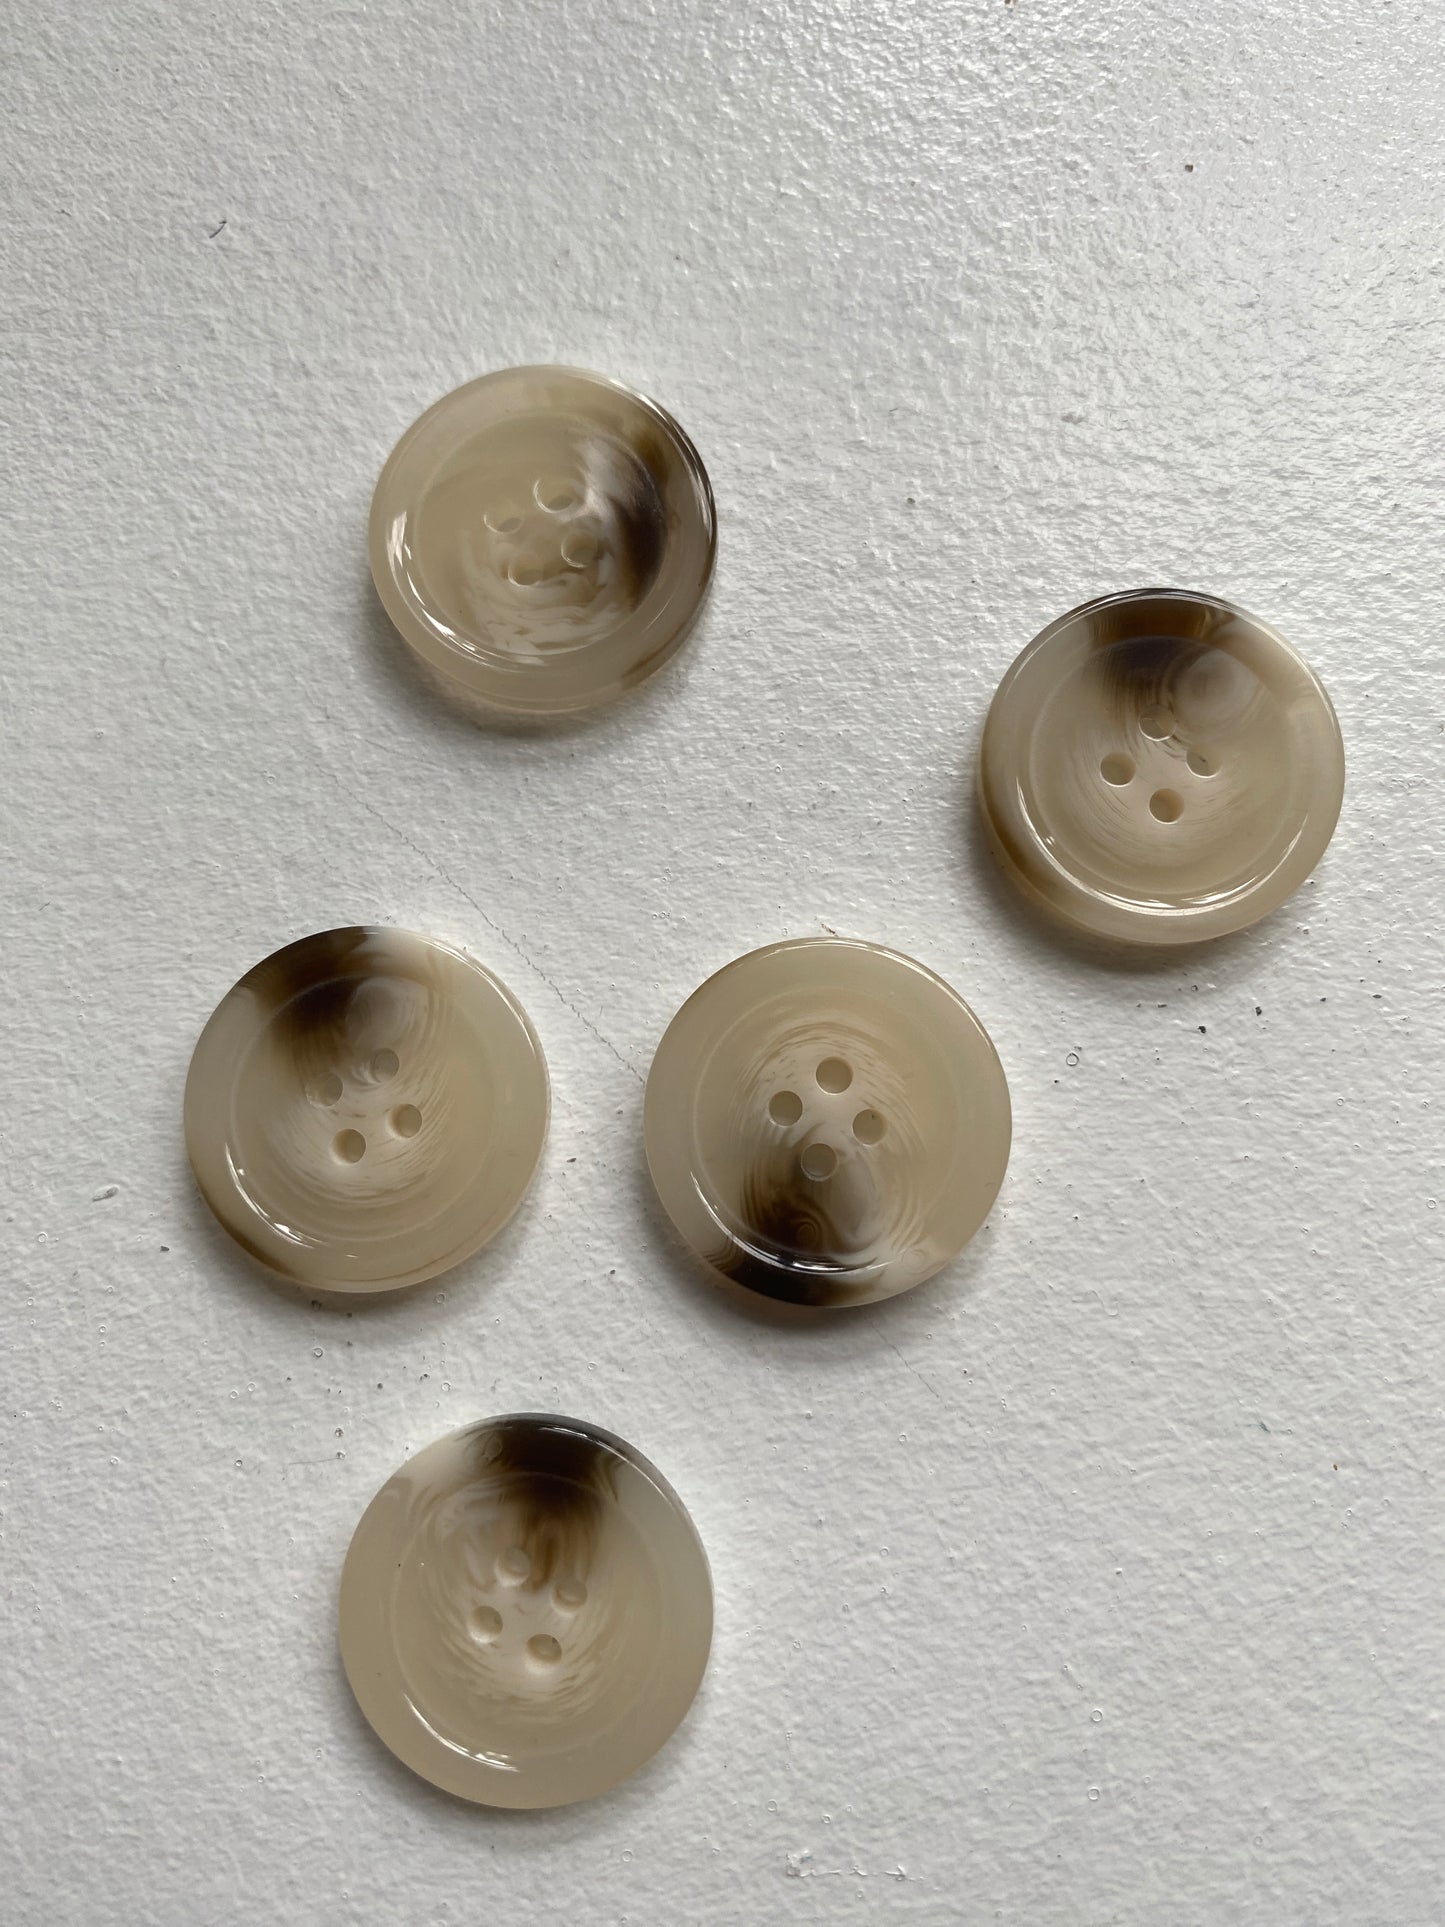 Light Tortoise Shell Button (23mm) - Set of 6